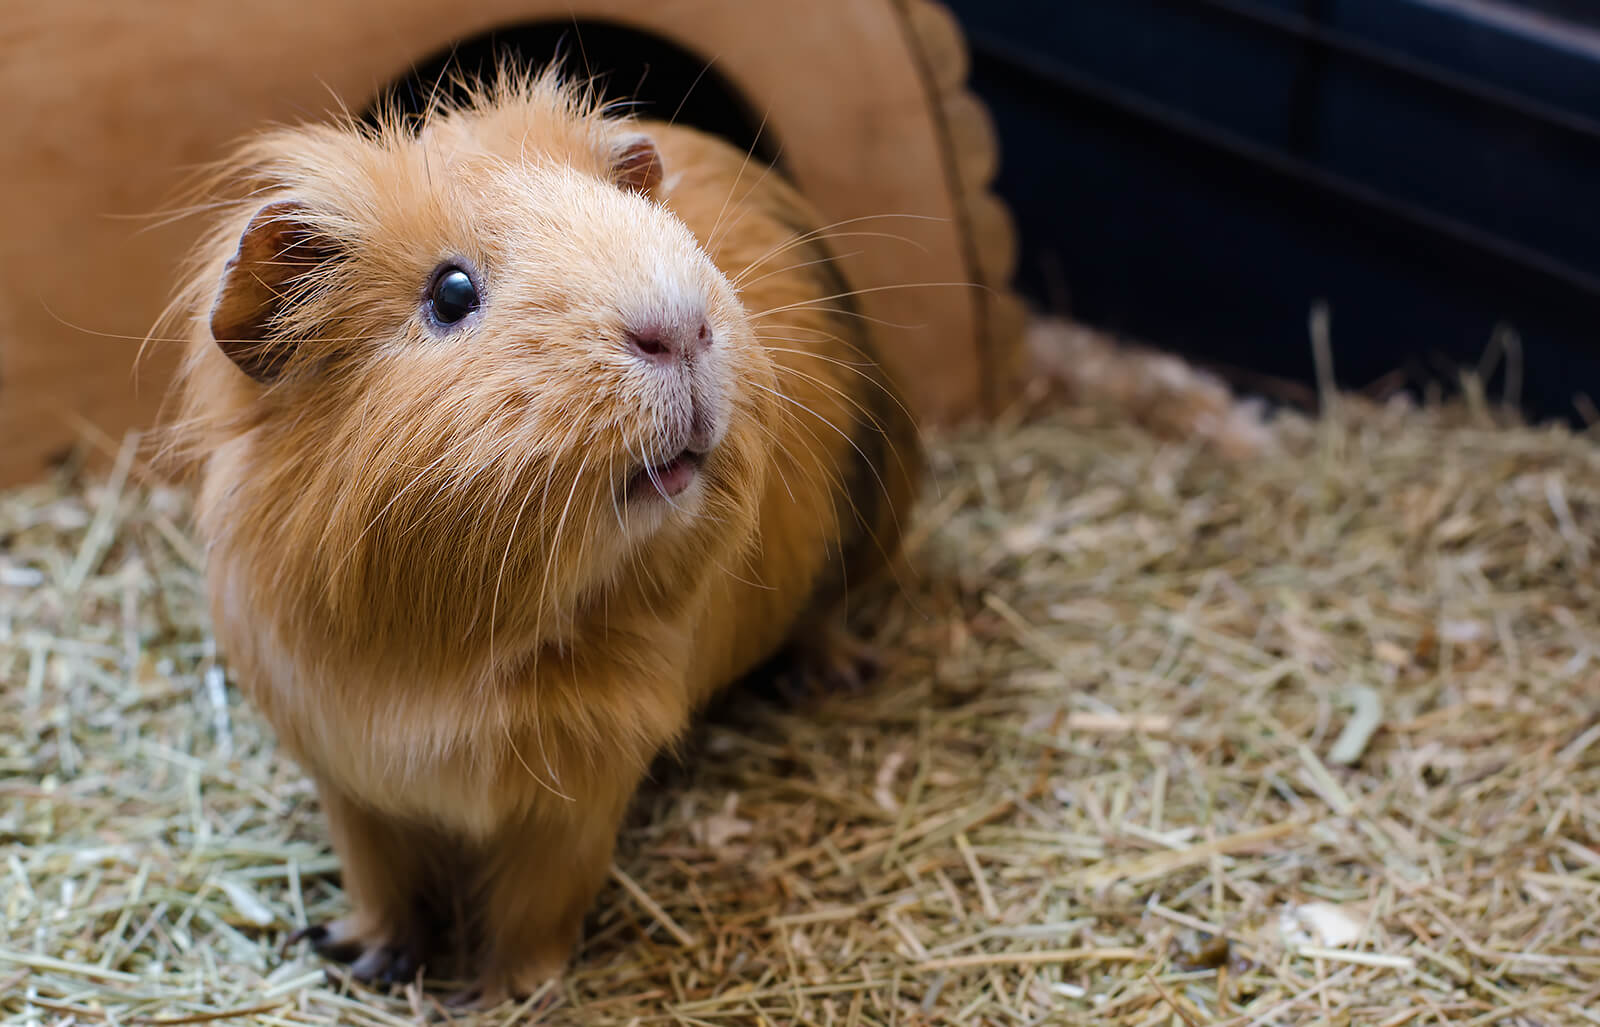 Guinea pig standing in hay bedding